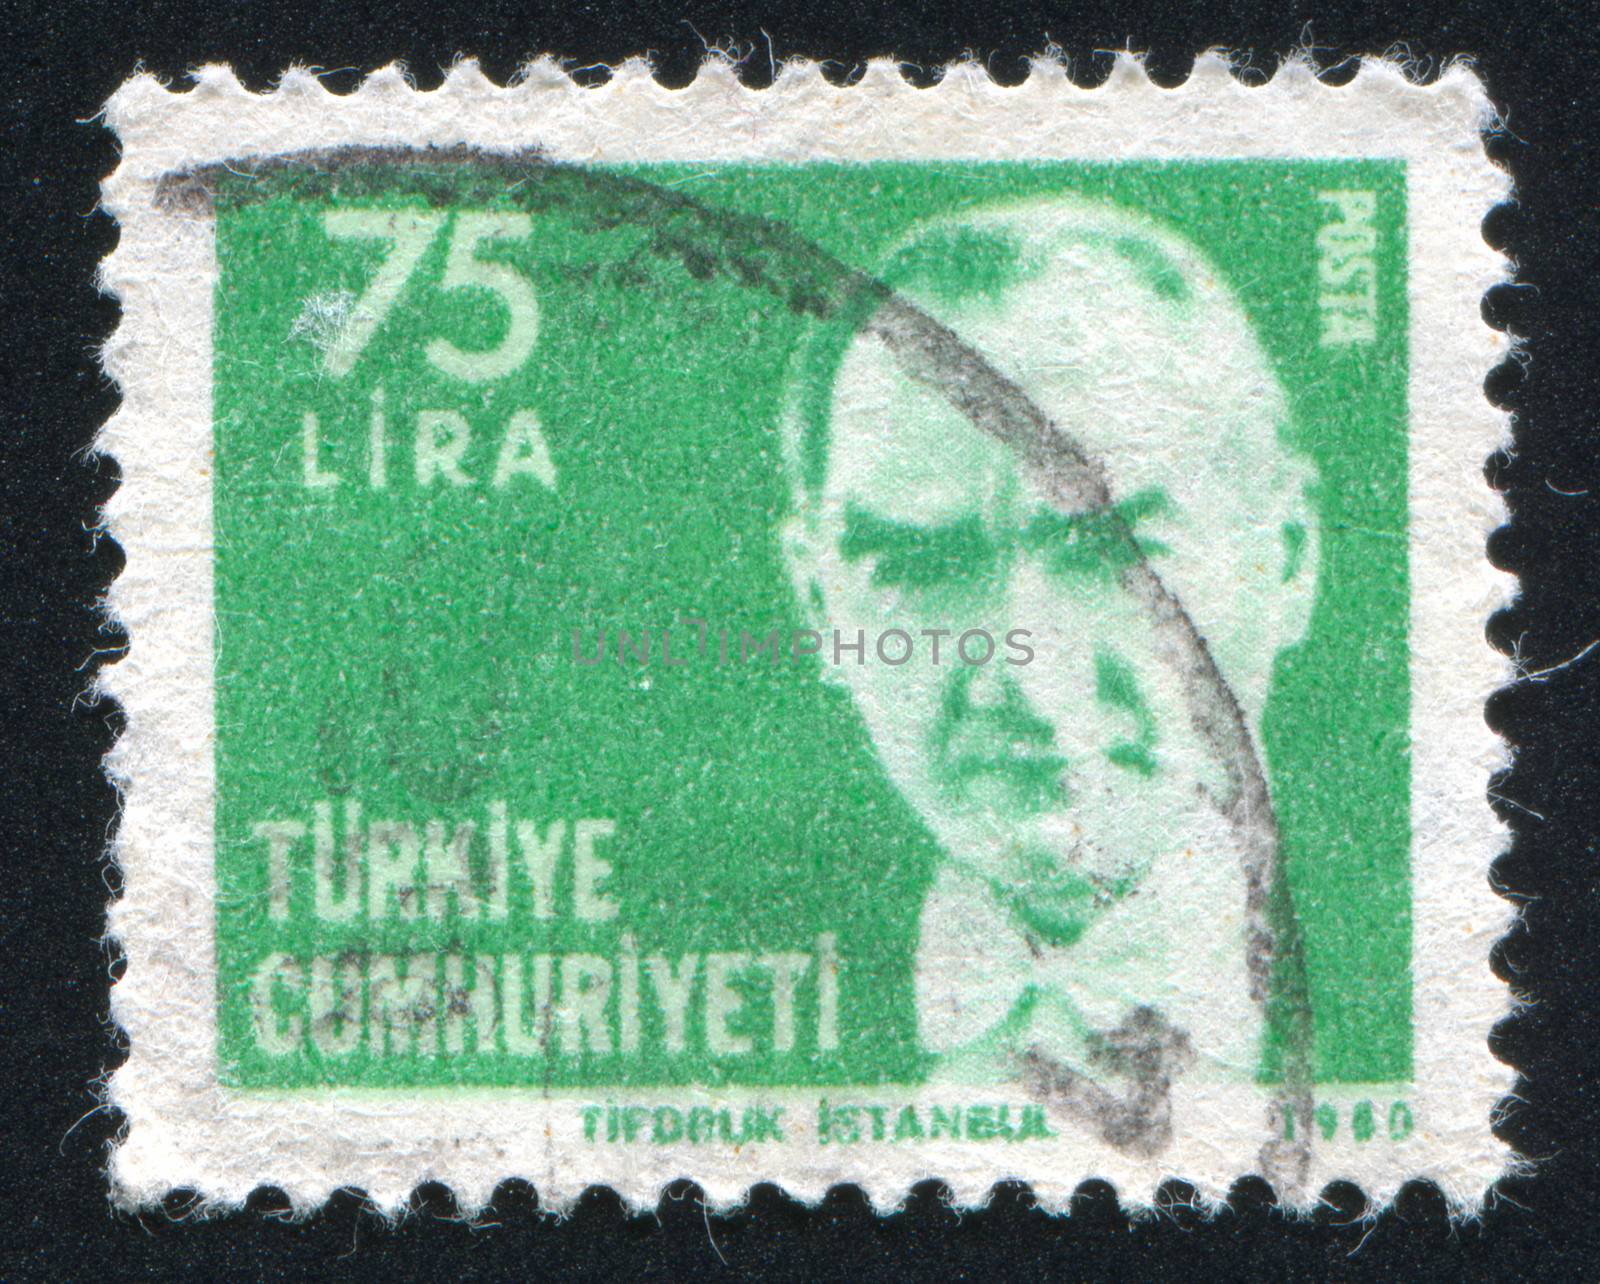 Kemal Ataturk by rook